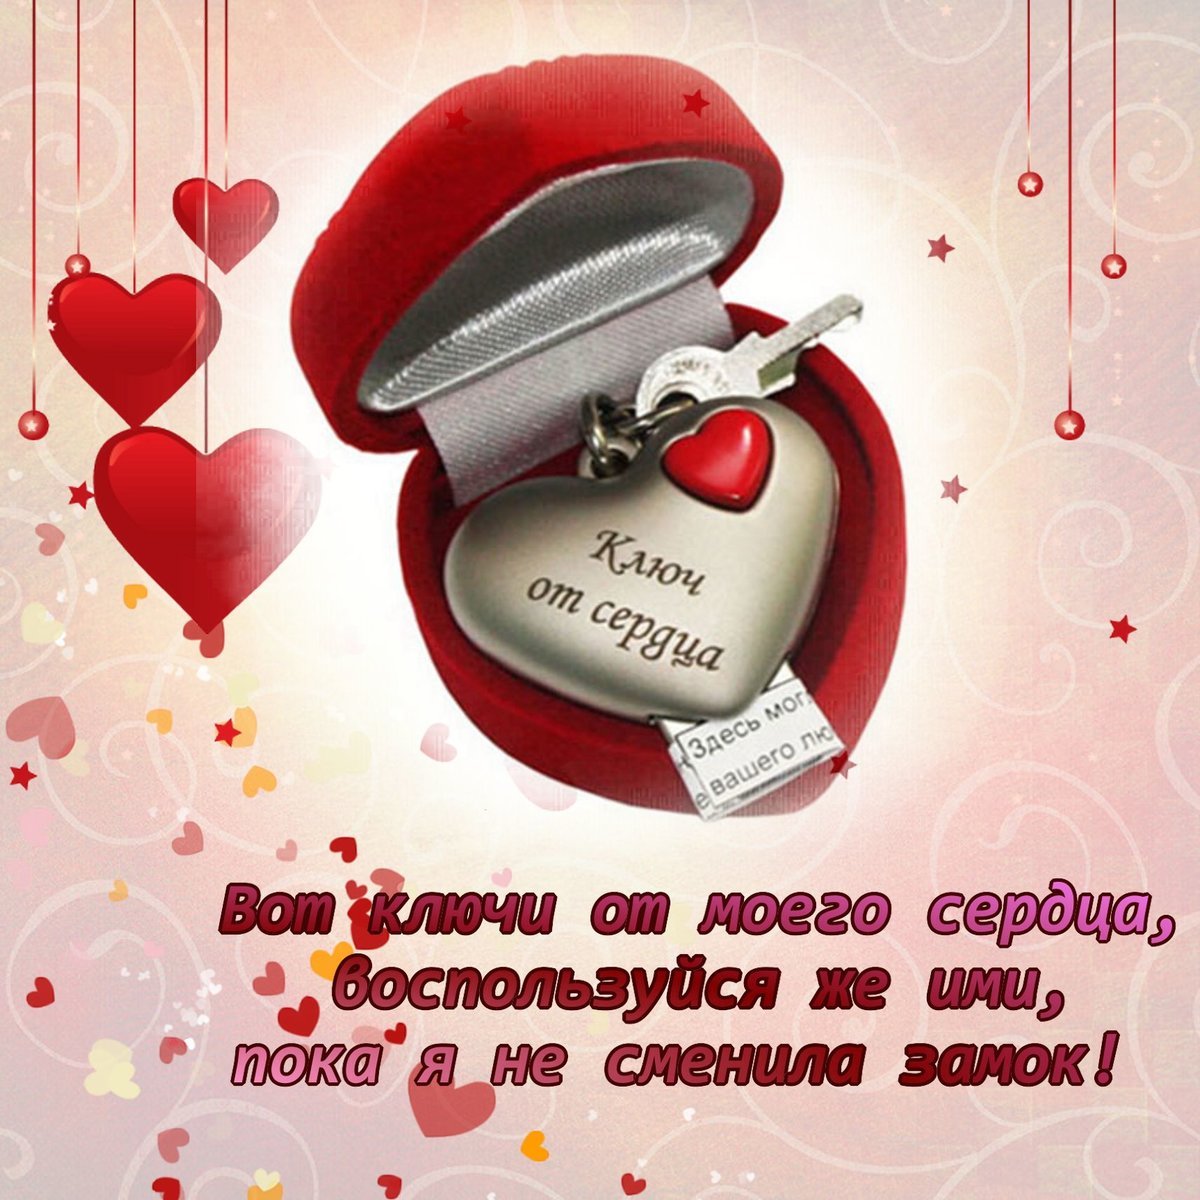 Кулон в форме сердца с гравировкой Ключи от моего сердца на фоне с сердечками и украшениями для открытки ко Дню Святого Валентина.